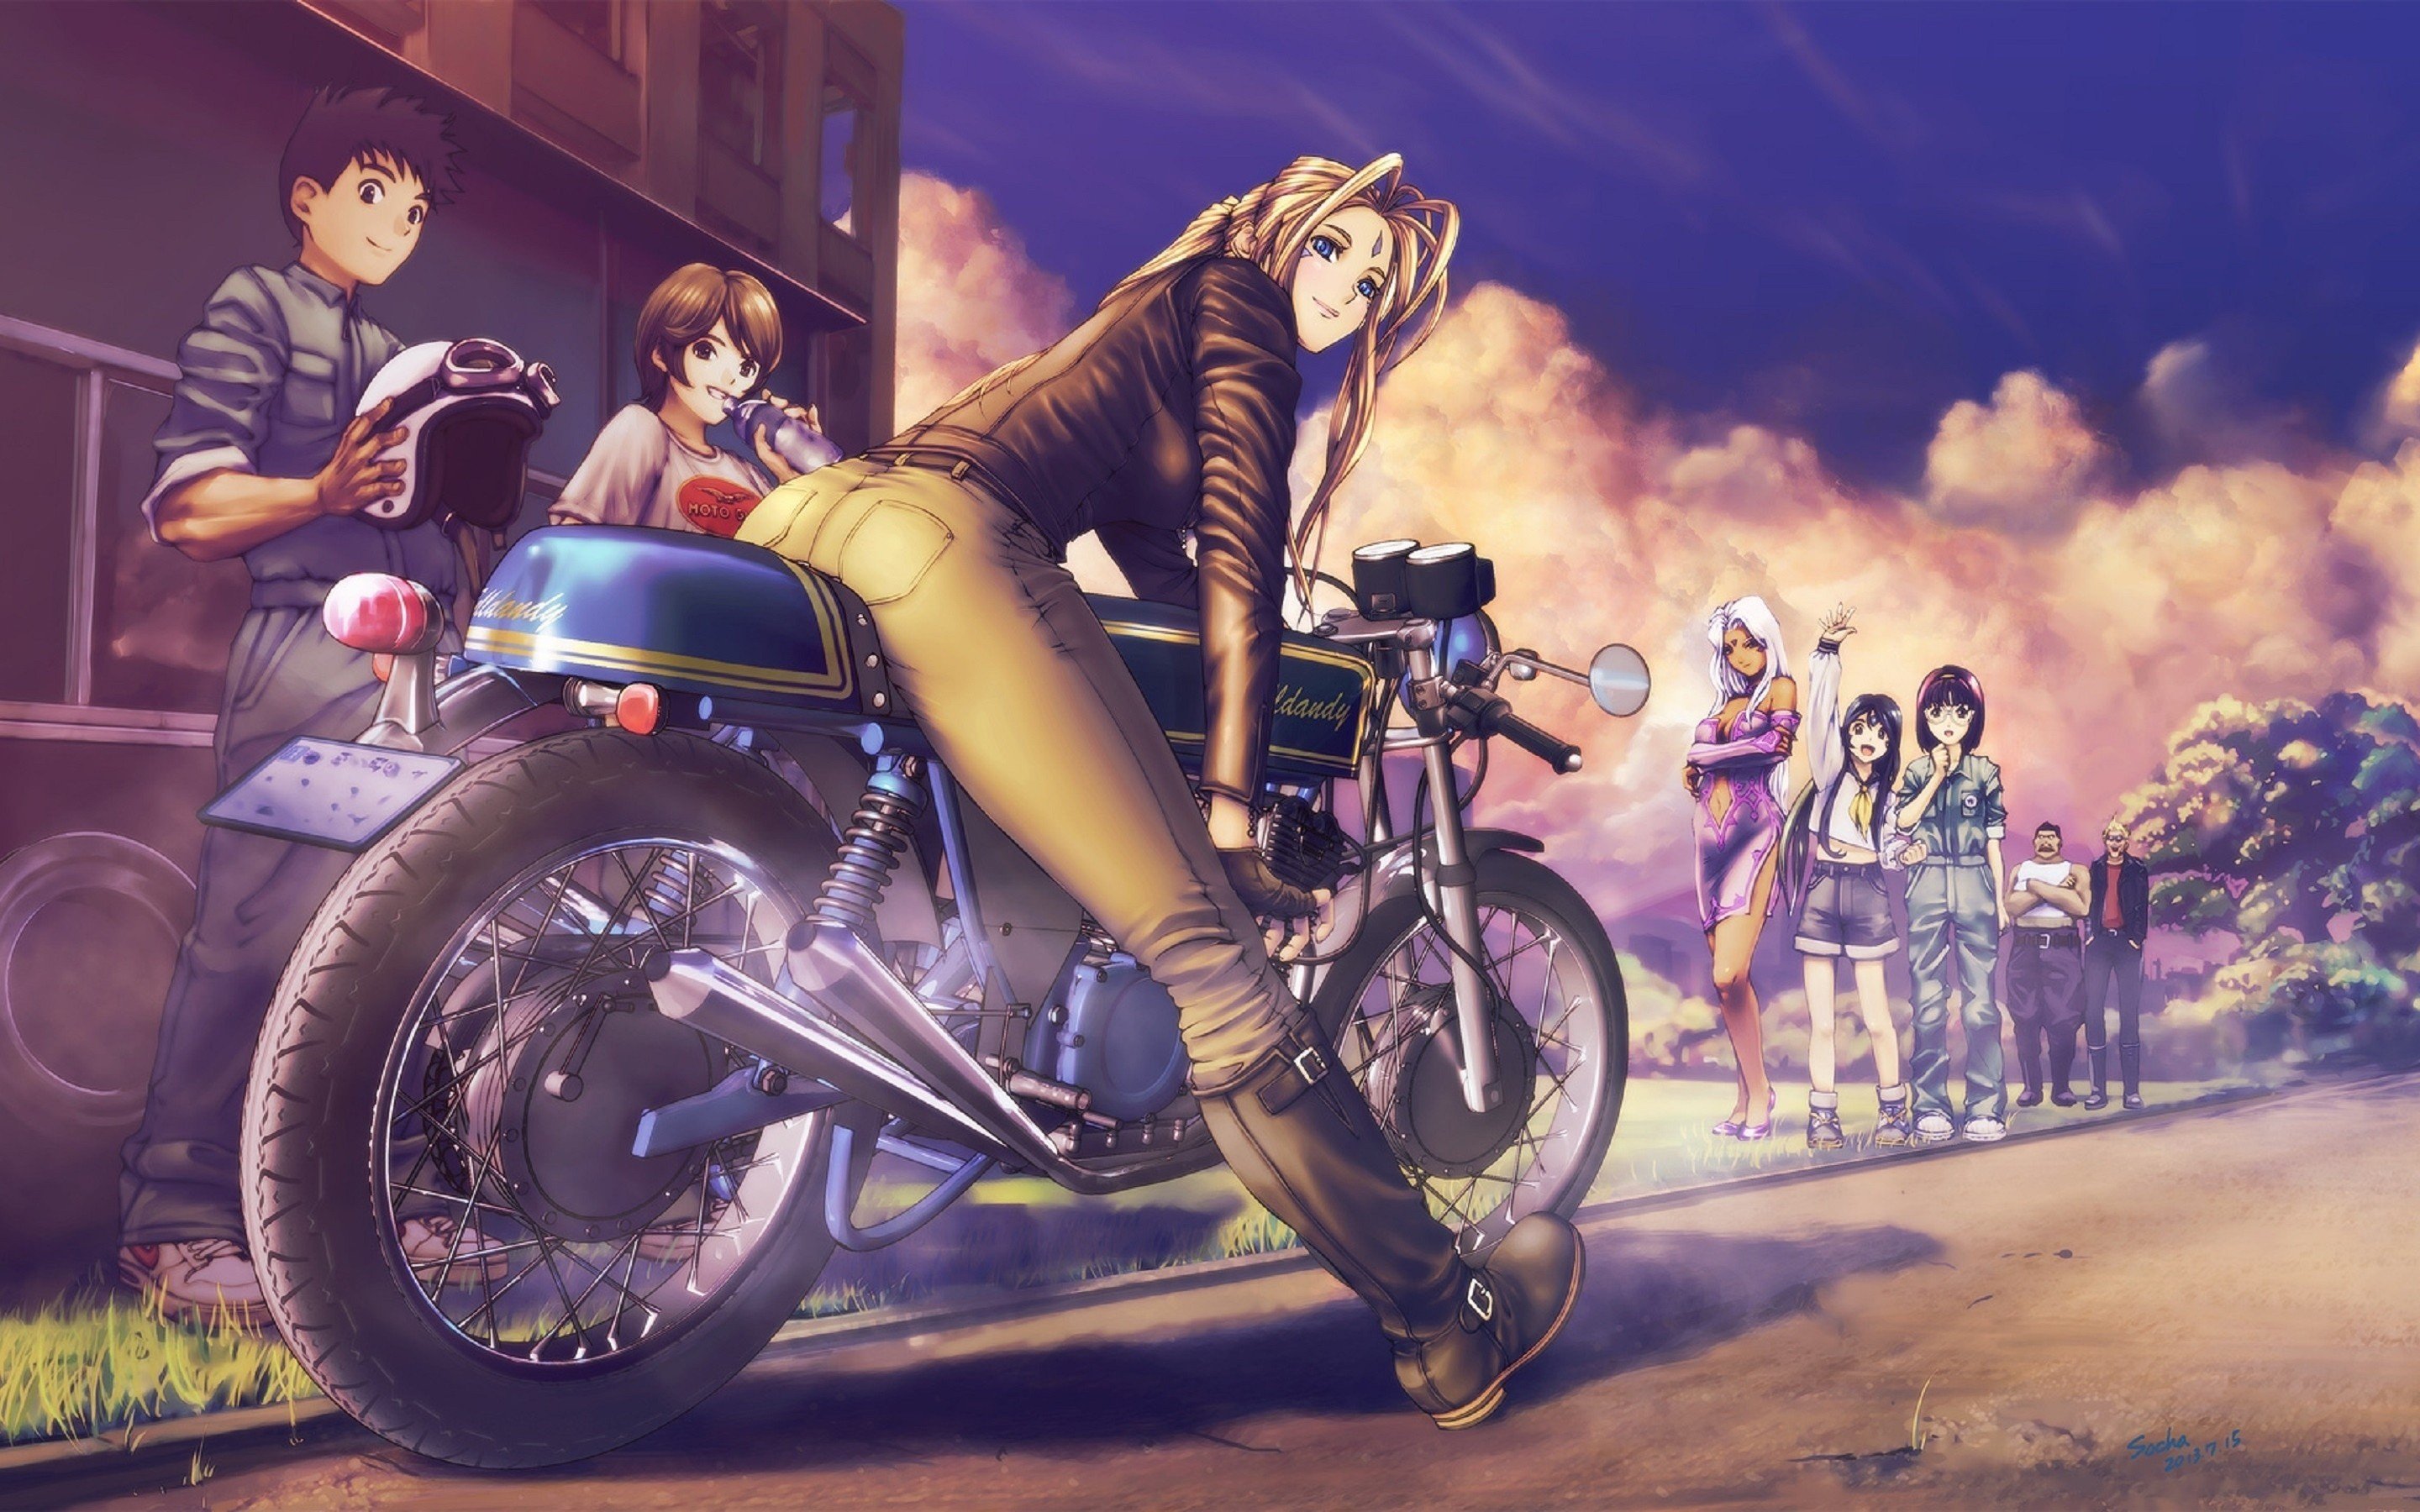 Wallpaper, anime girls, bicycle, motorcycle, vehicle, Ah My Goddess, Belldandy, Cafe Racer, motorcycling, stunt performer, mountain bike, extreme sport 2880x1800